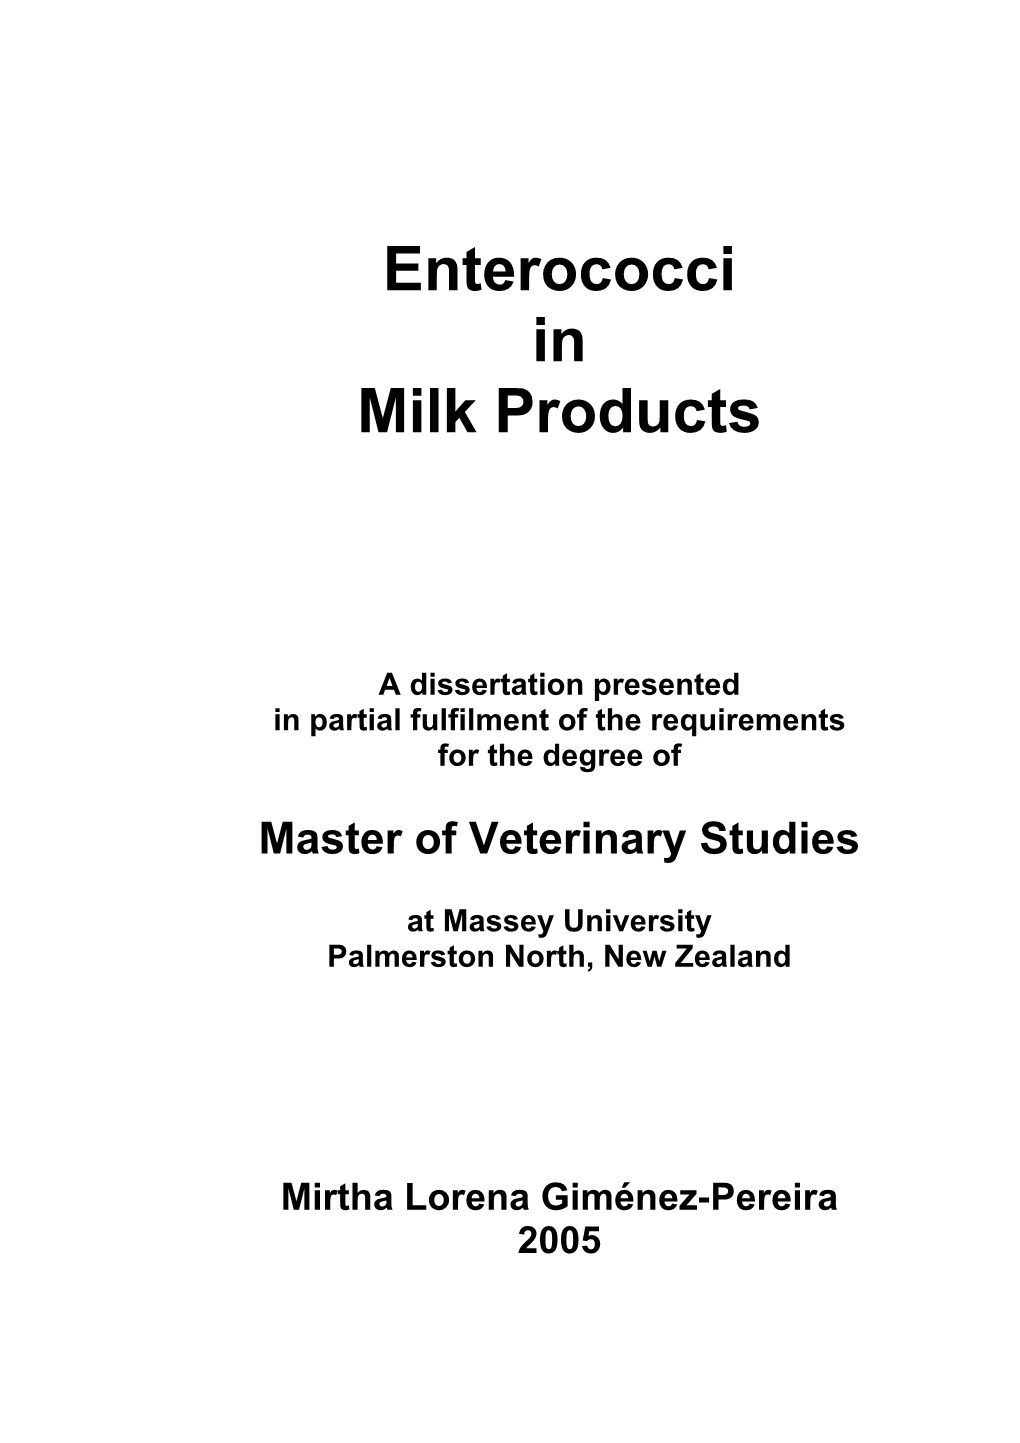 Enterococci in Milk Products